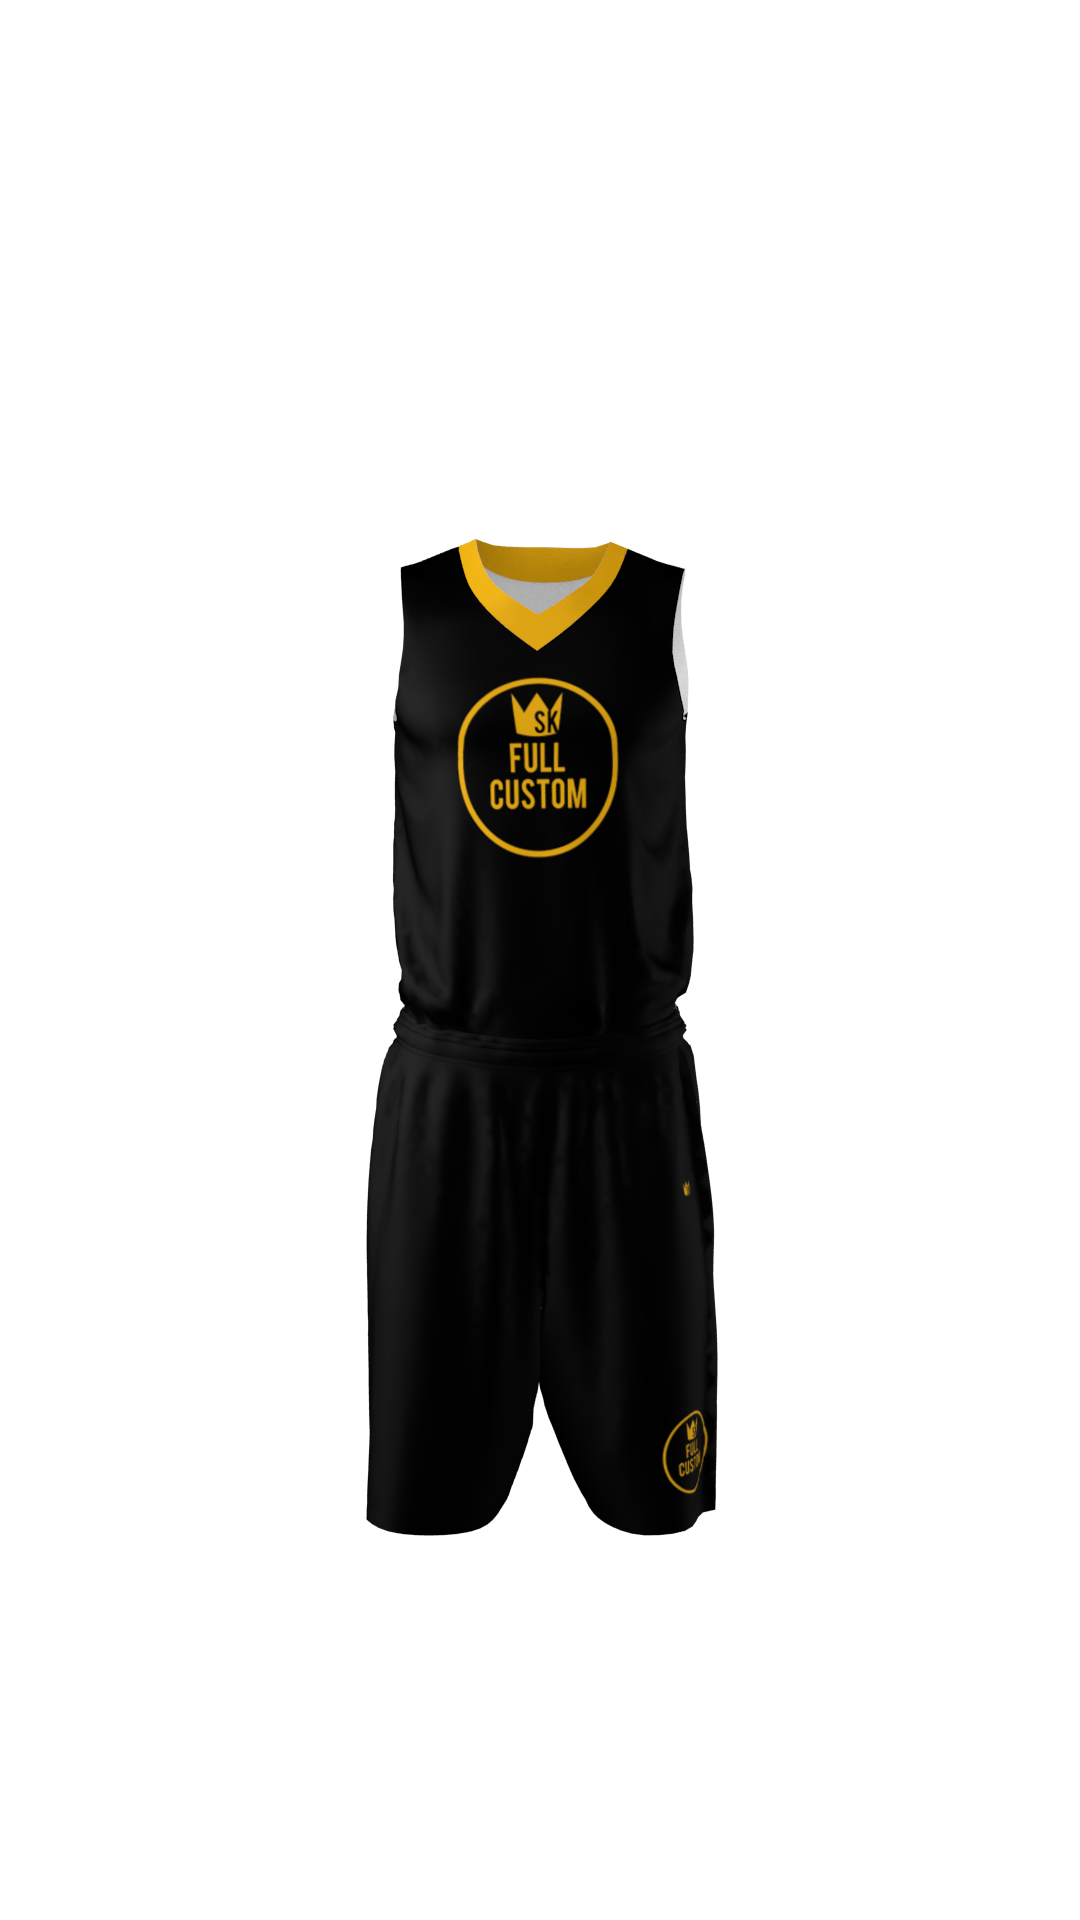 Custom Black Basketball Jersey Uniform: Design Your Own Uniforms